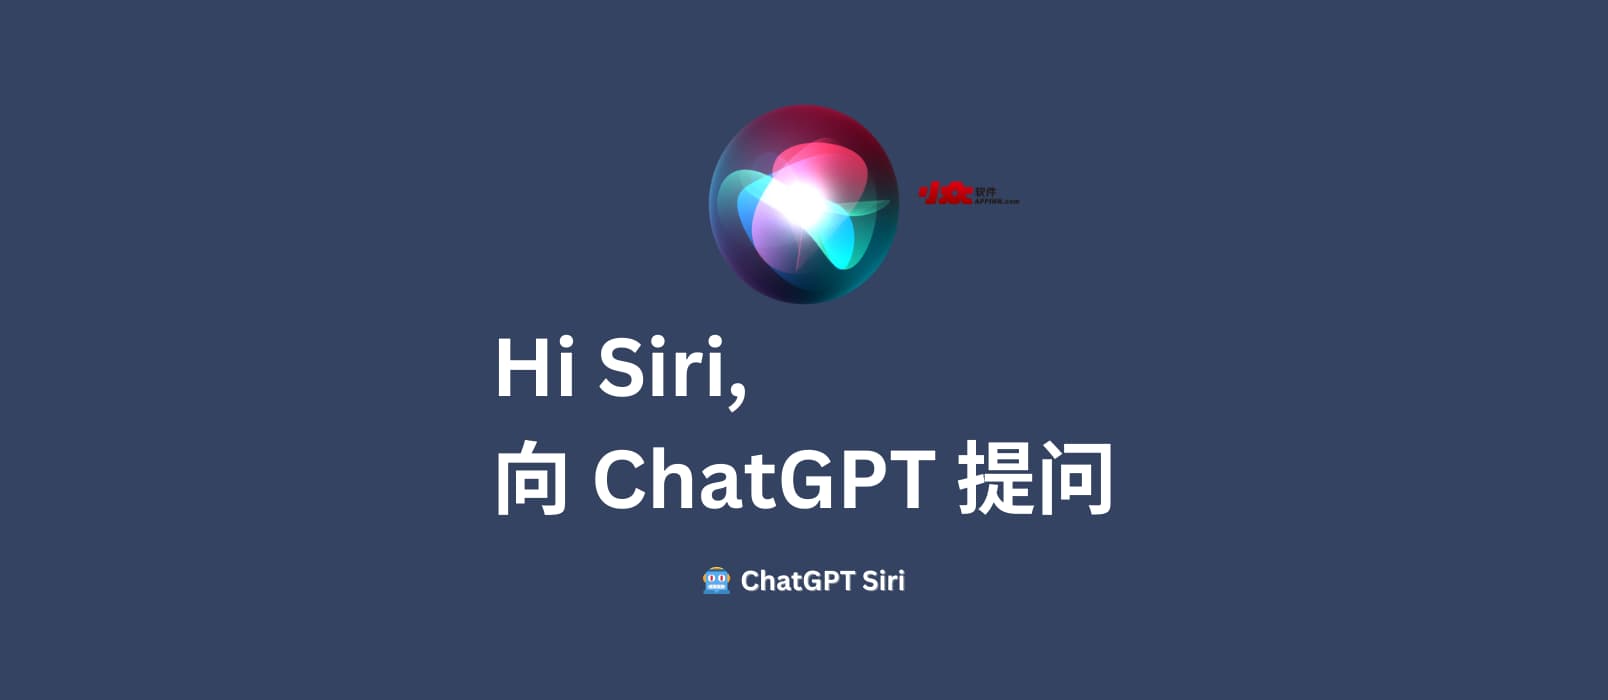 🤖️ ChatGPT Siri - 语音指令，用 Hi Siri 向 ChatGPT 提问[快捷指令] 1